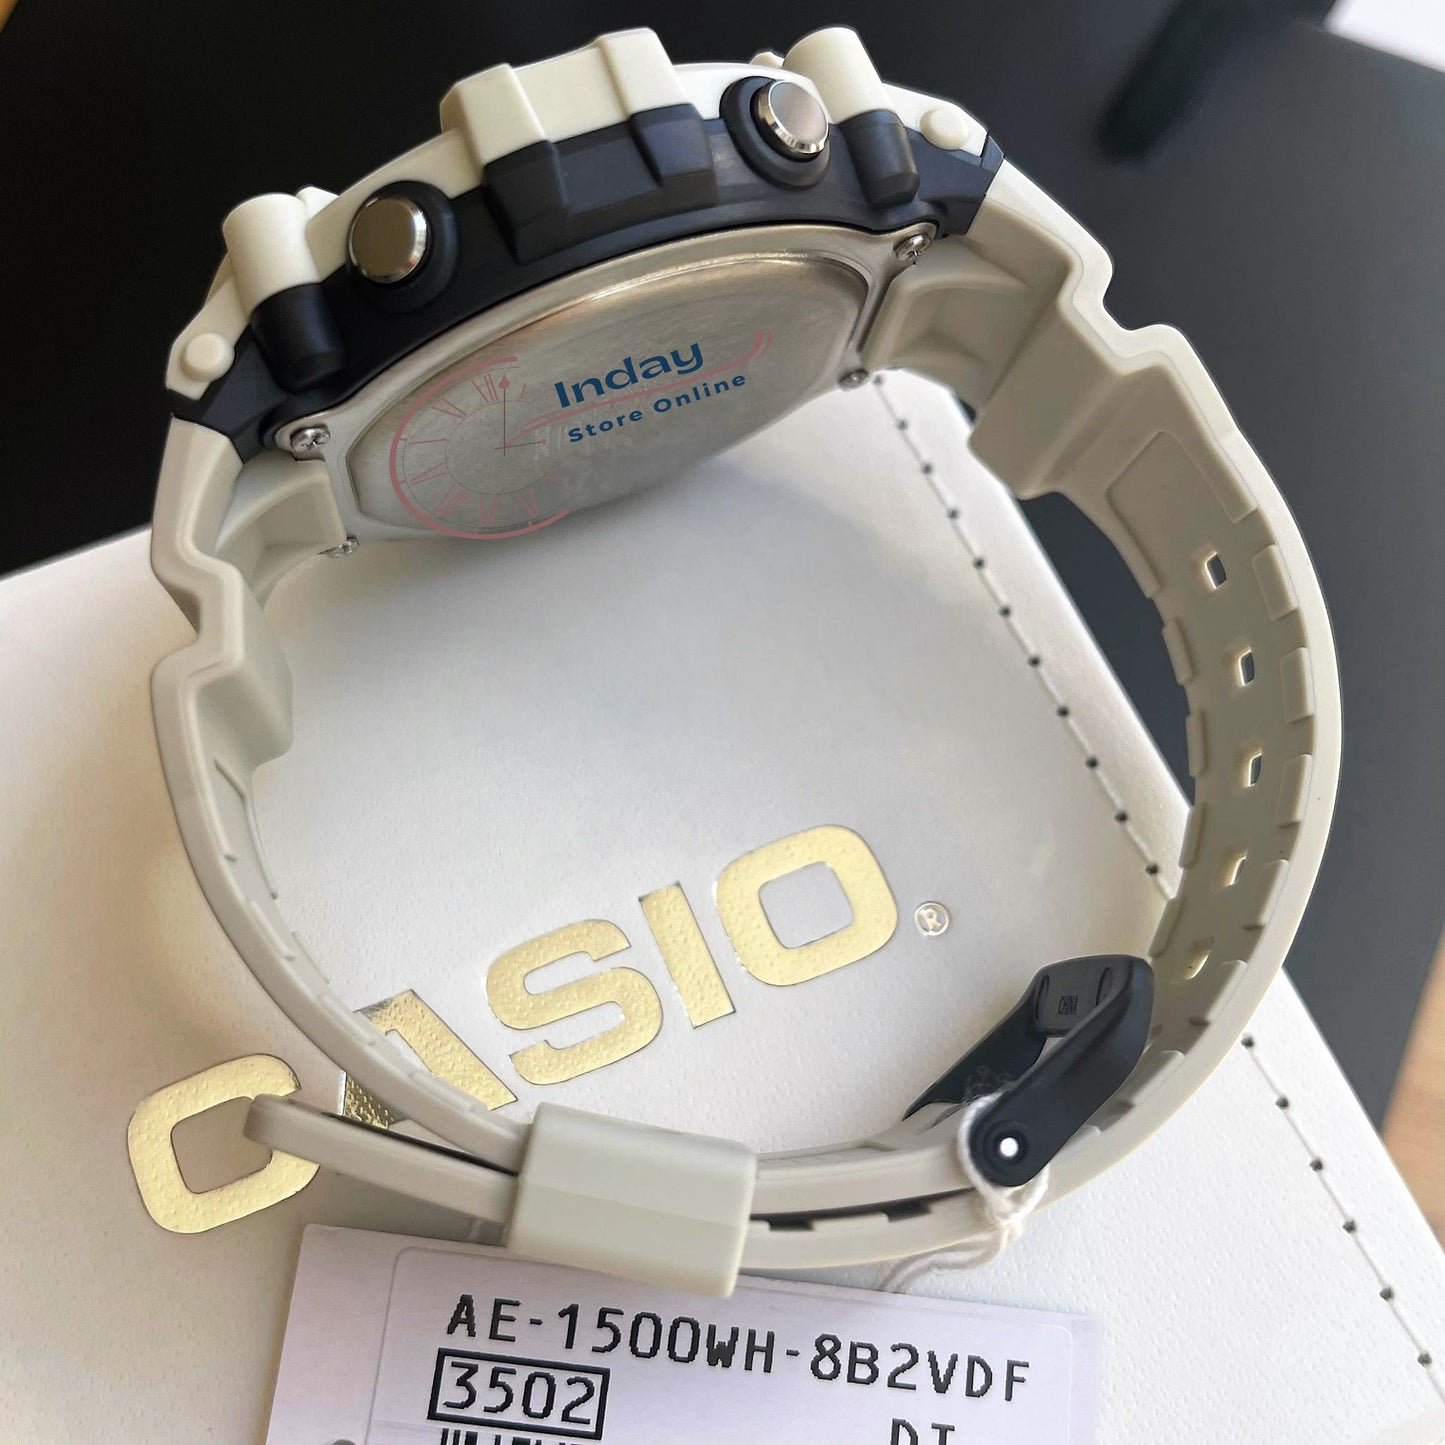 Casio Digital Men's Watch AE-1500WH-8B2